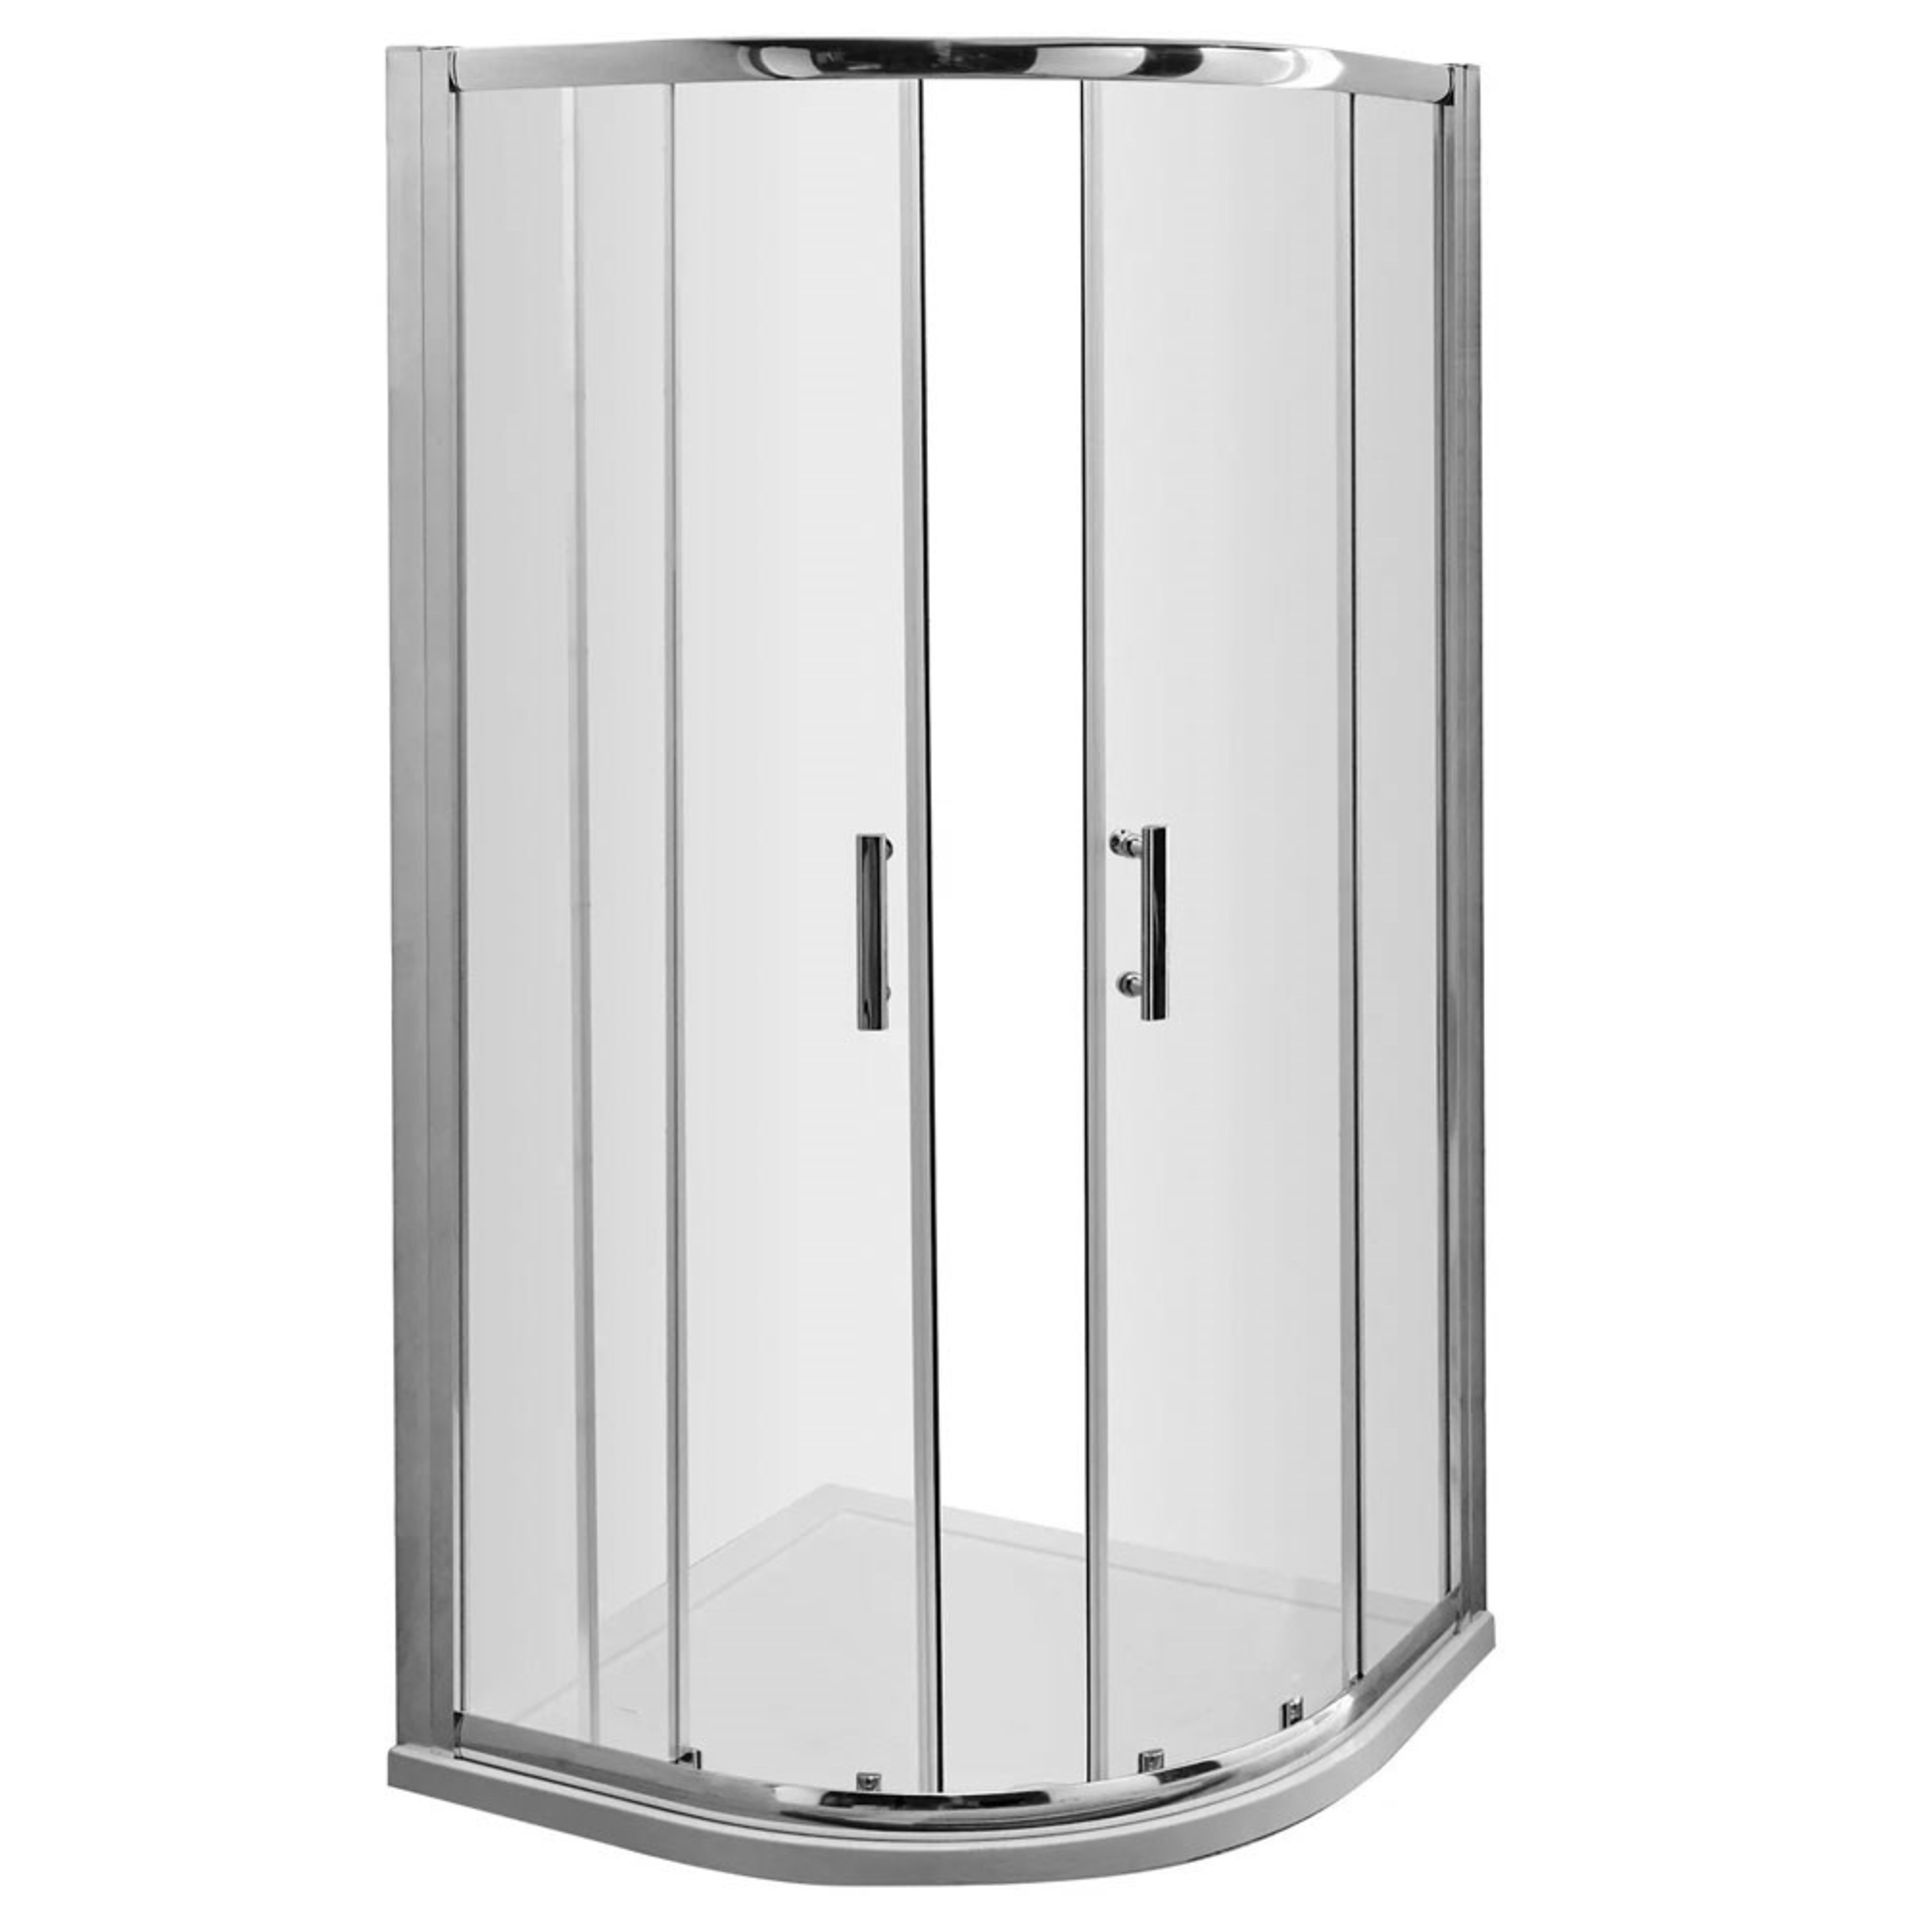 Twyfords 800x800mm - Premium EasyClean Sliding Door Quadrant Shower Enclosure.RRP £499.99 High... - Image 2 of 3